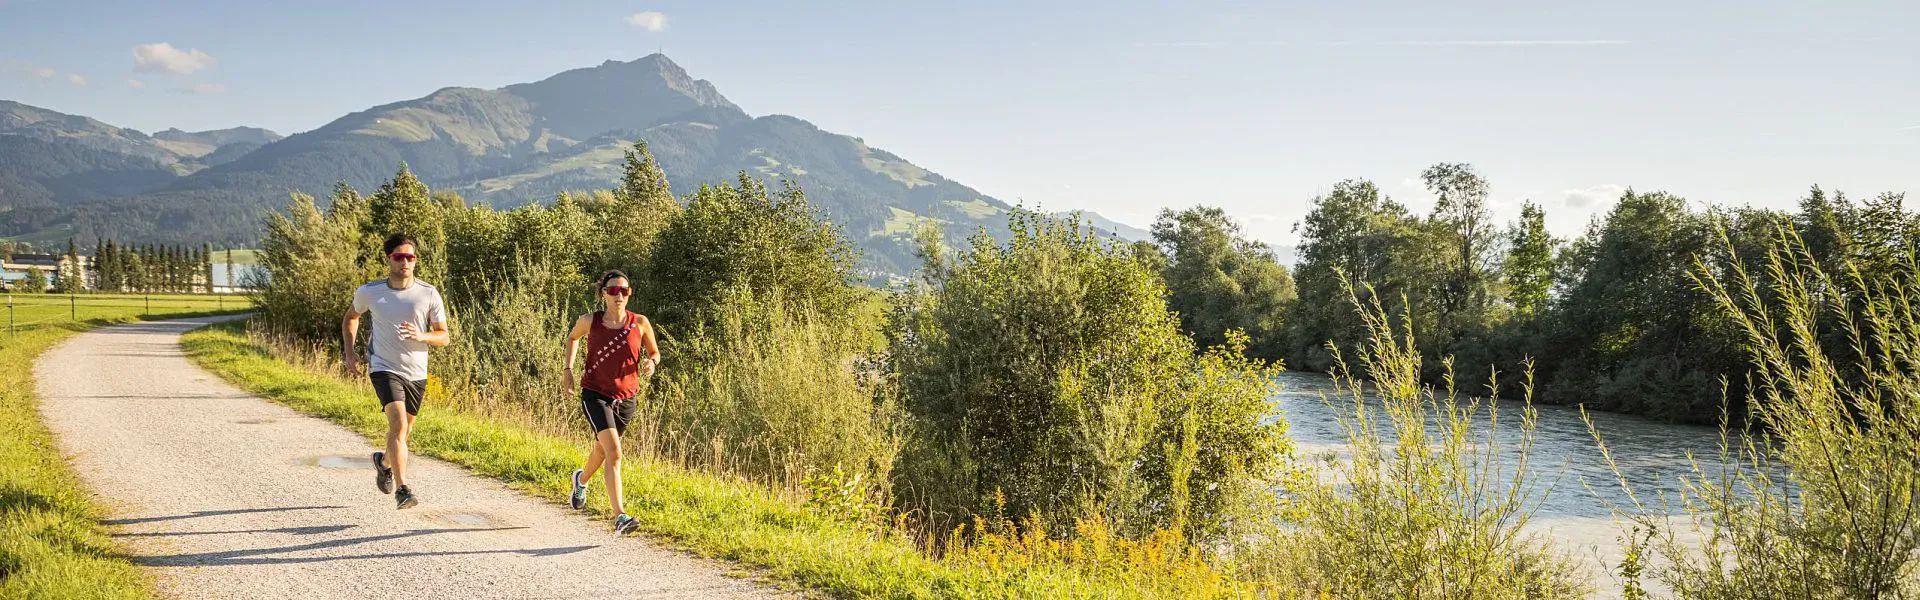 Laufen & Trailrunning - Region St. Johann in Tirol